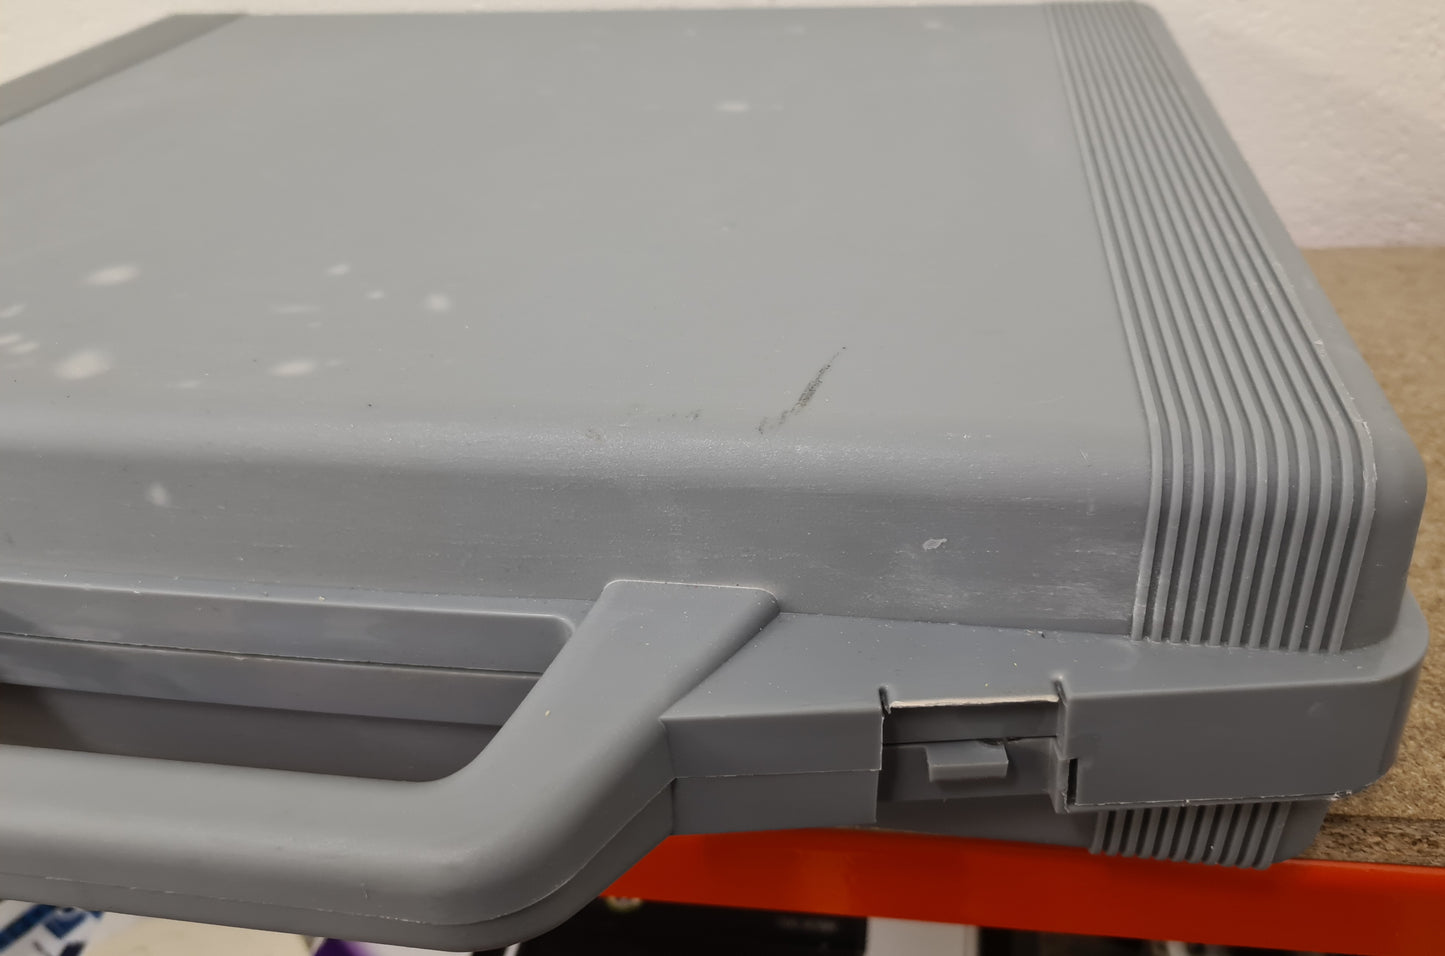 Super Nintendo Entertainment System (SNES) Console with Plastic Carry Case